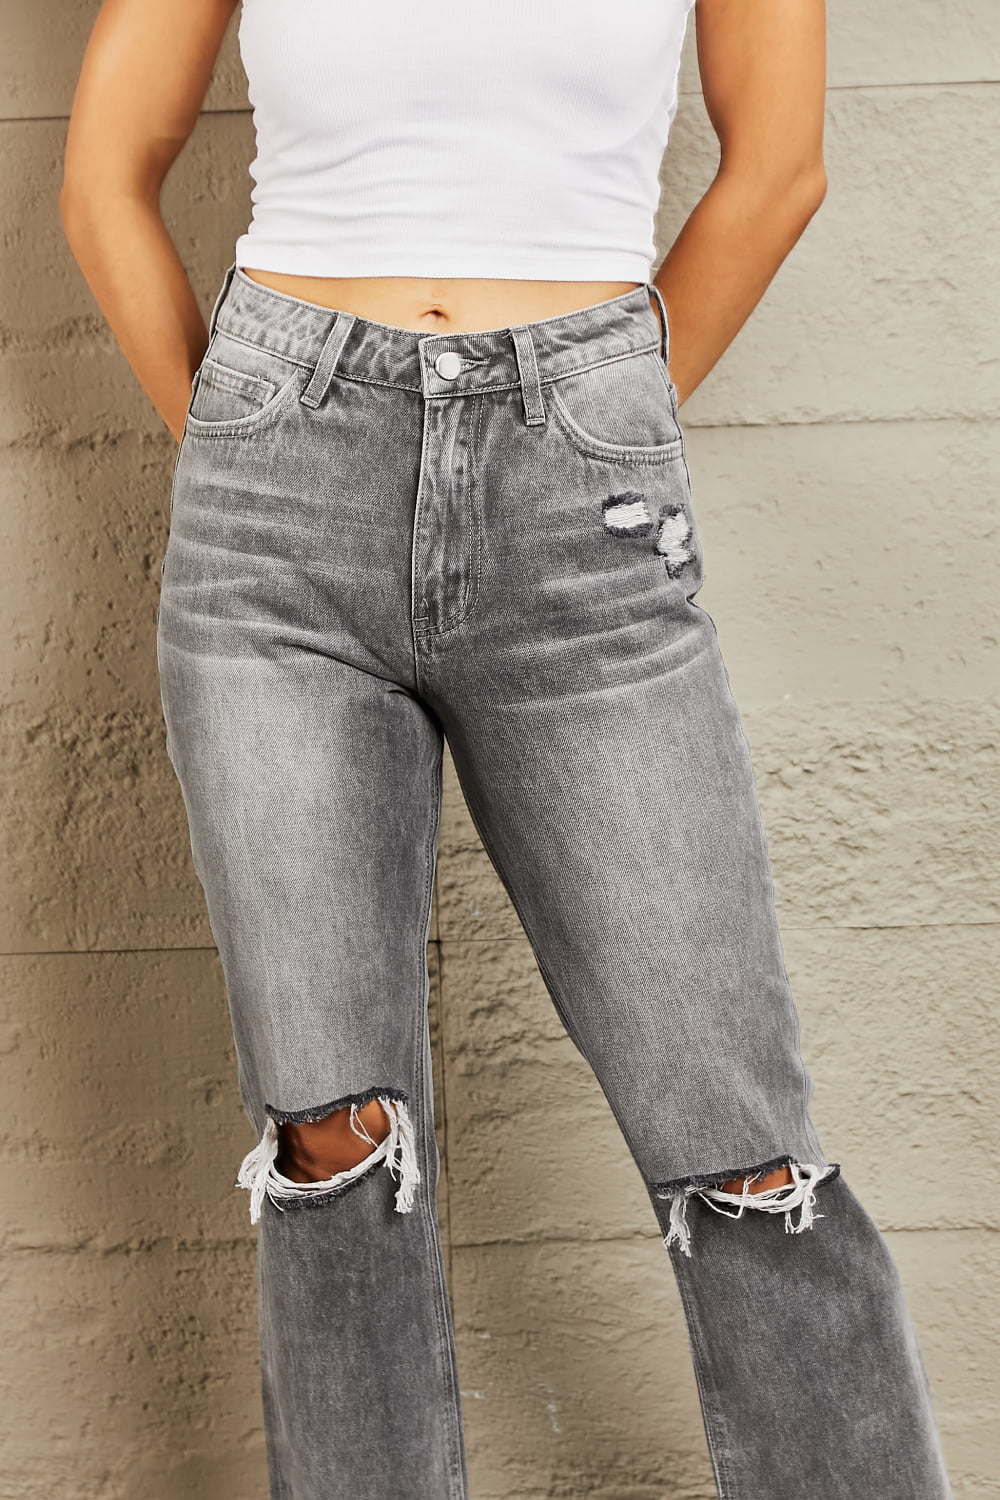 BAYEAS Stone Wash Distressed Cropped Straight Jeans - Tigbul's Fashion